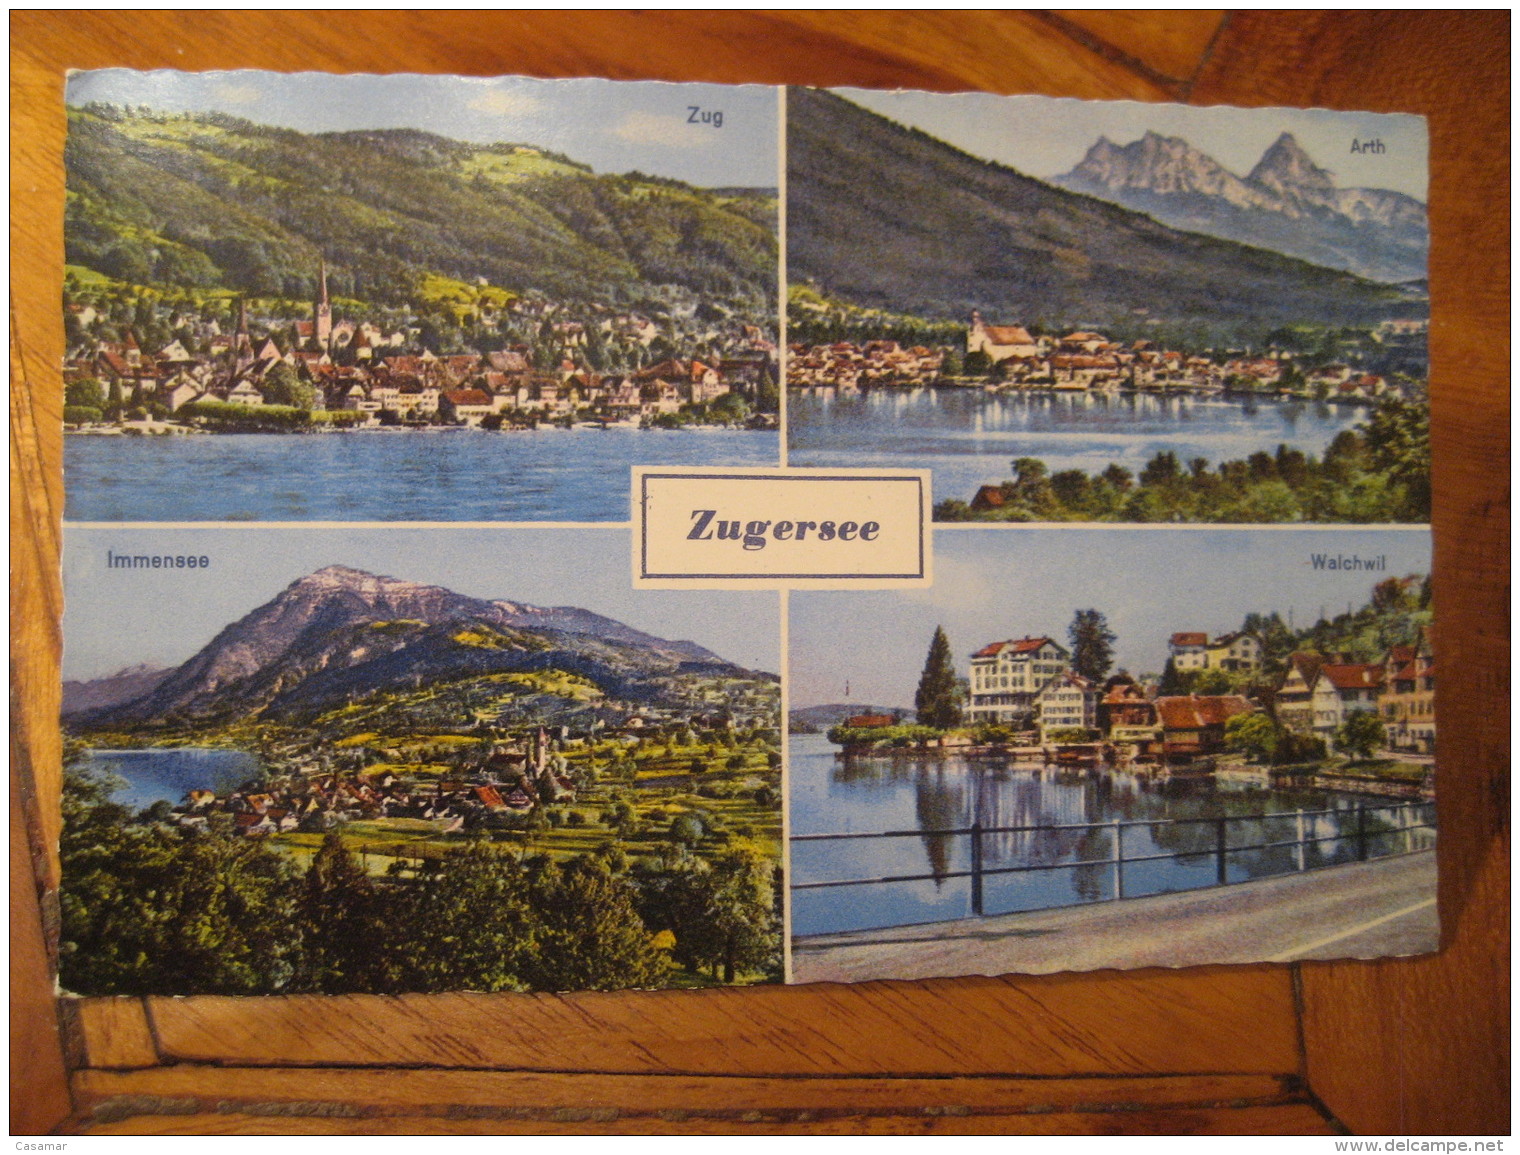 ZUGERSEE Zuger See Lake Arth Alchwill Immensee Post Card ZUG Switzerland - Zoug